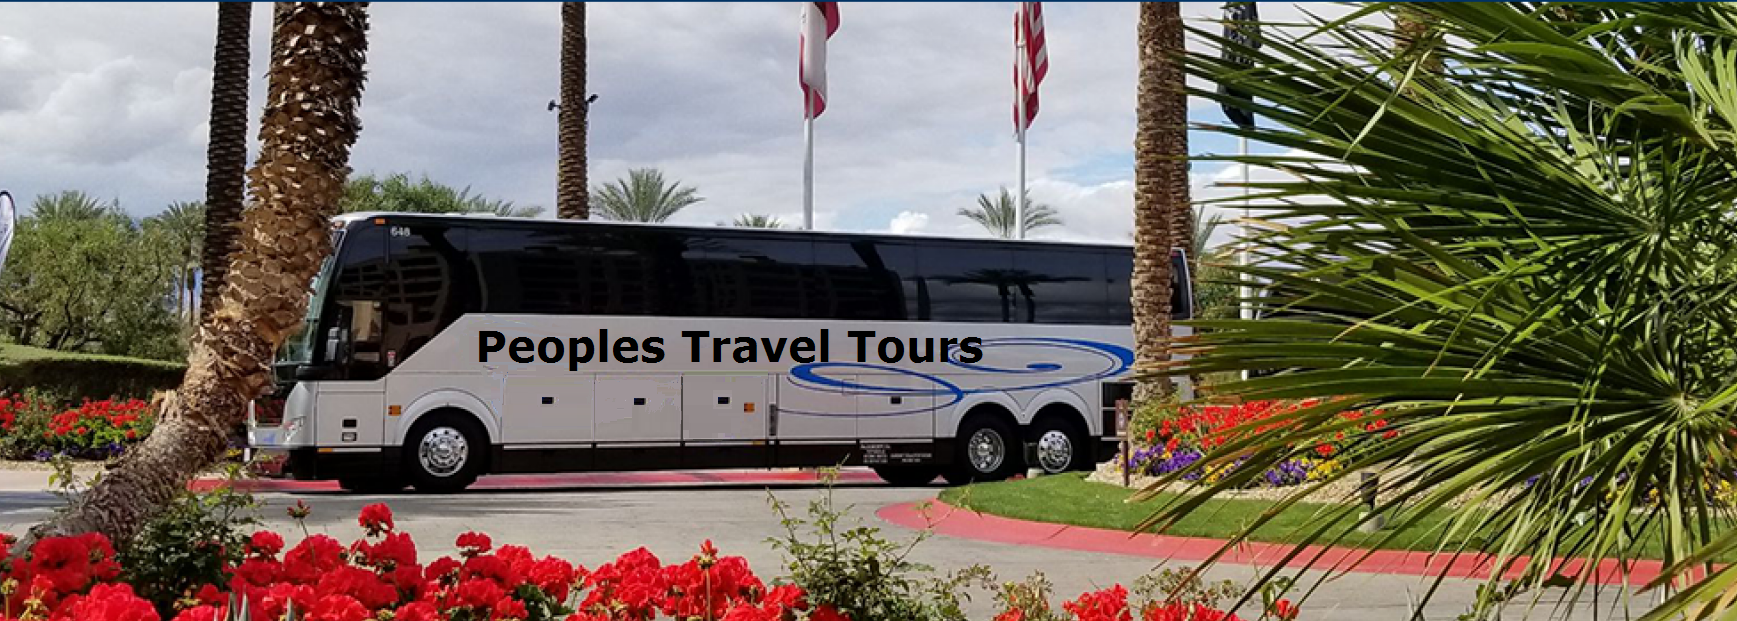 Coach Bus Service South Florida - Peoples Travel Tours